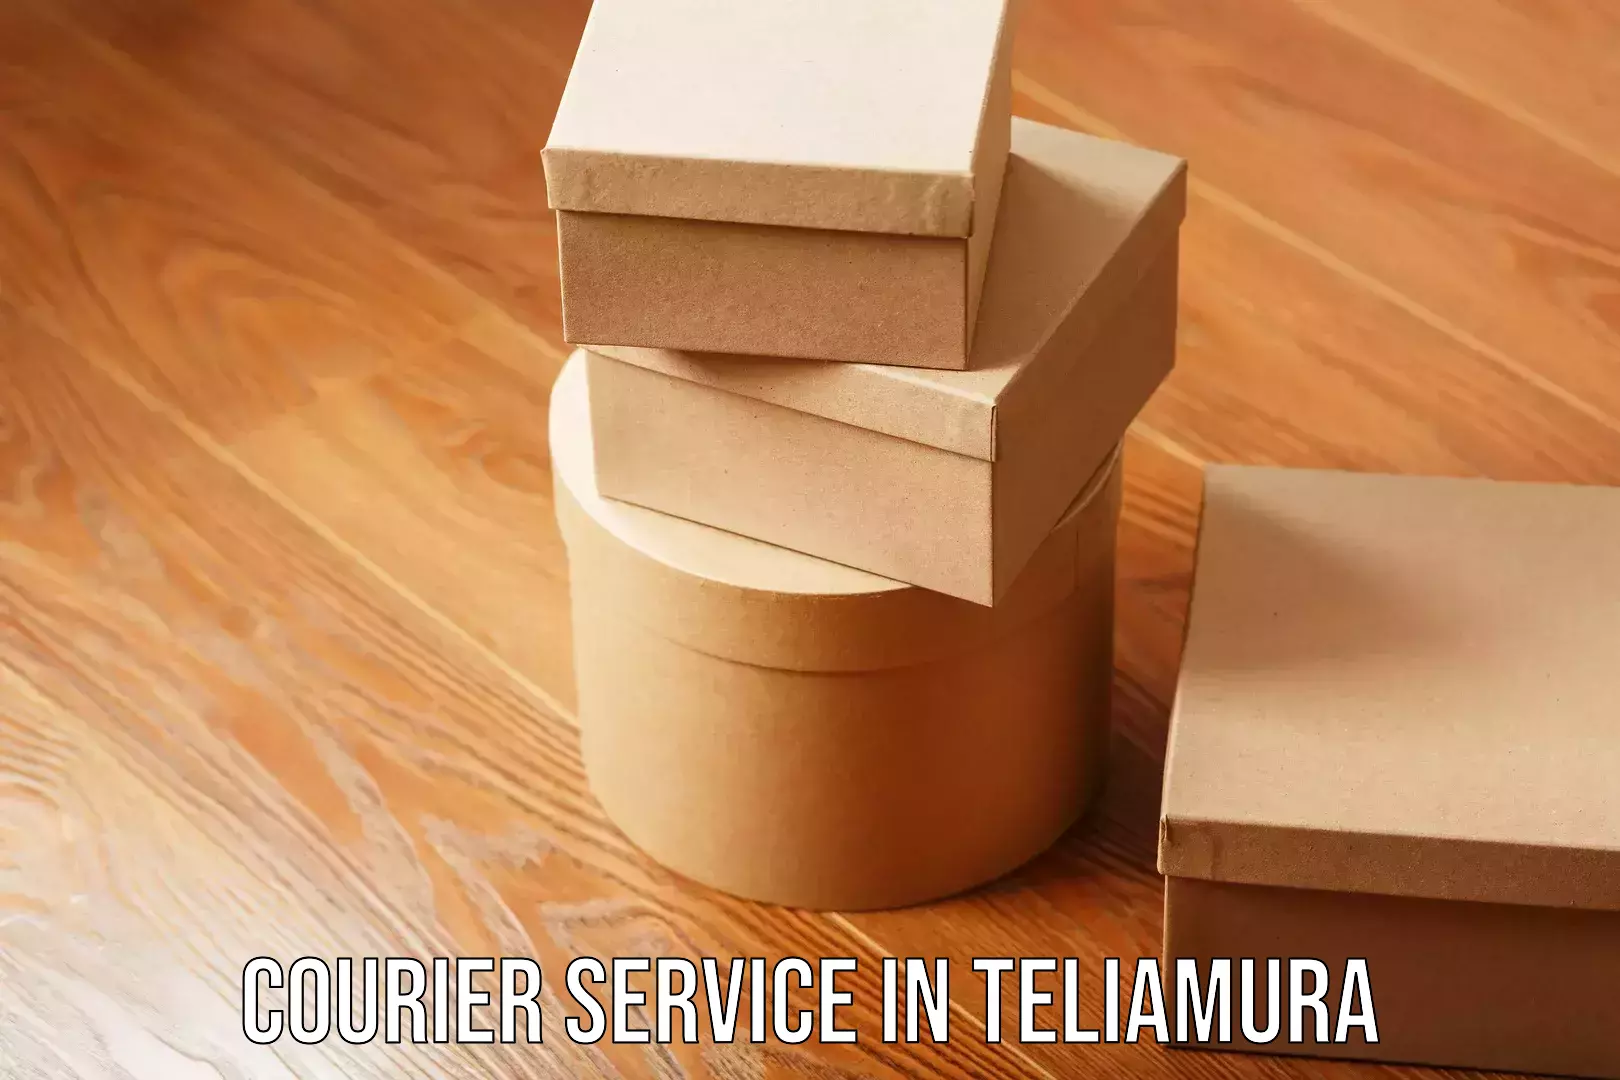 Efficient shipping platforms in Teliamura